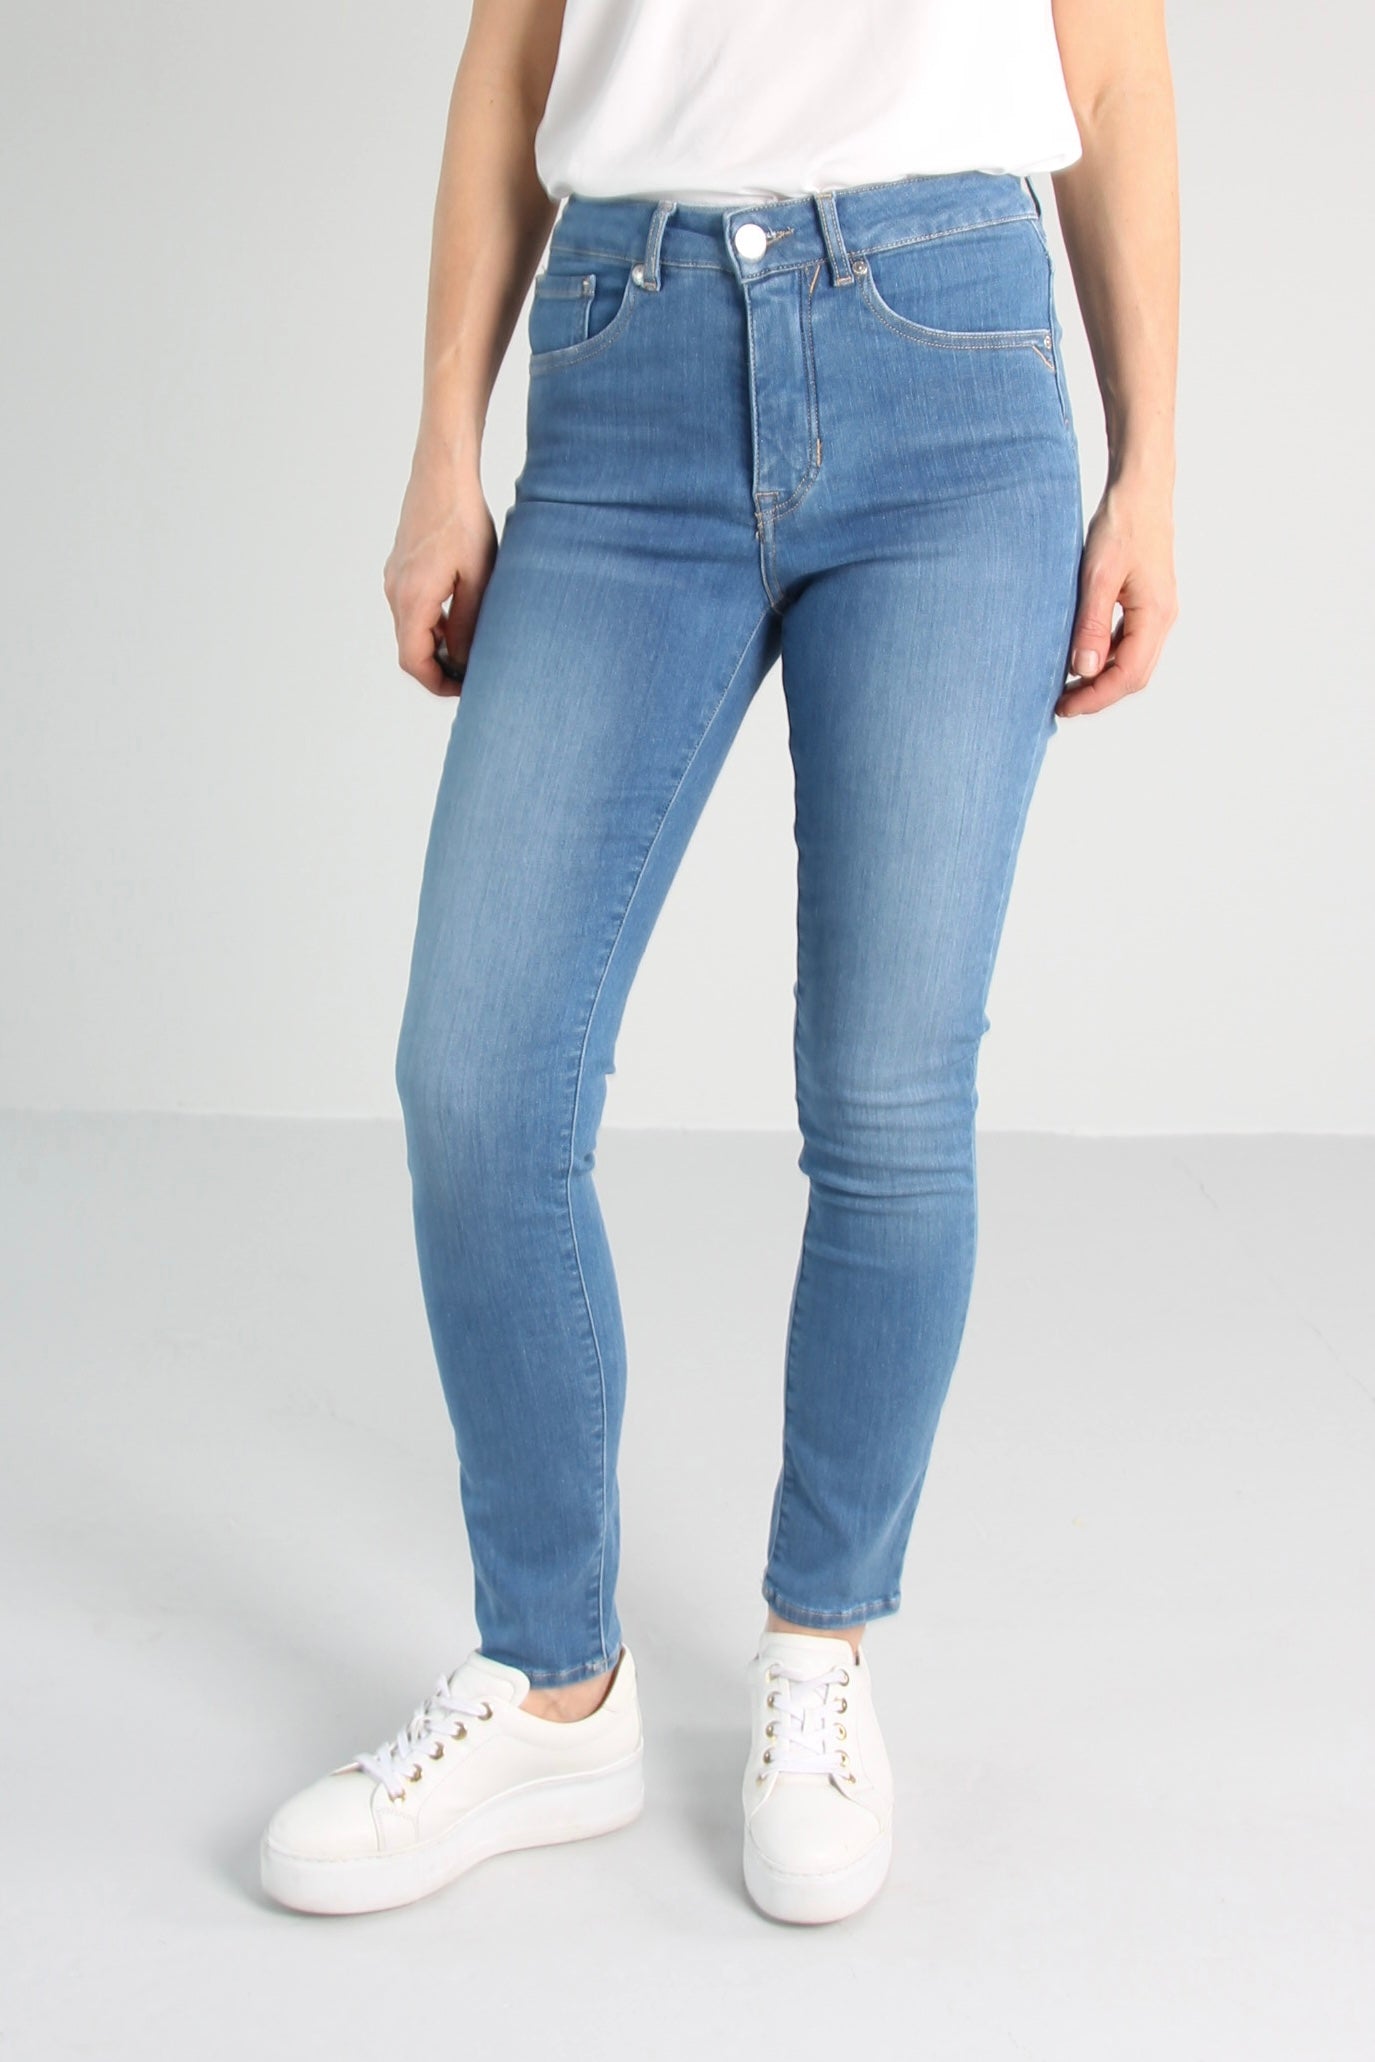 Ayla Sea blue Jeans - Dame - Slim  - High waist - Stretchy